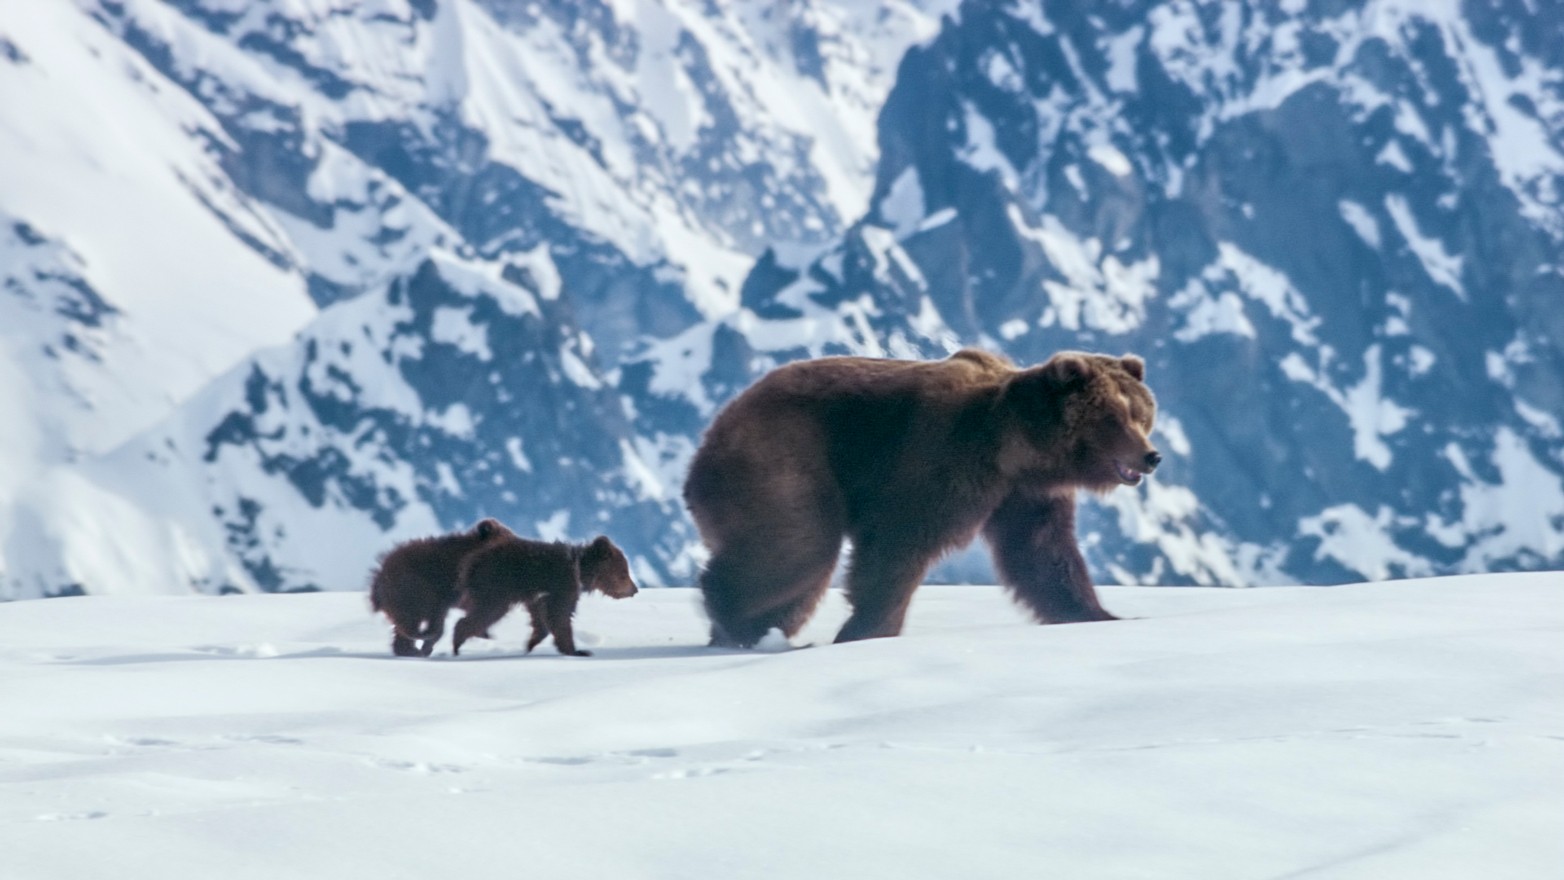 A scene from Disneynature's Bears (2014)